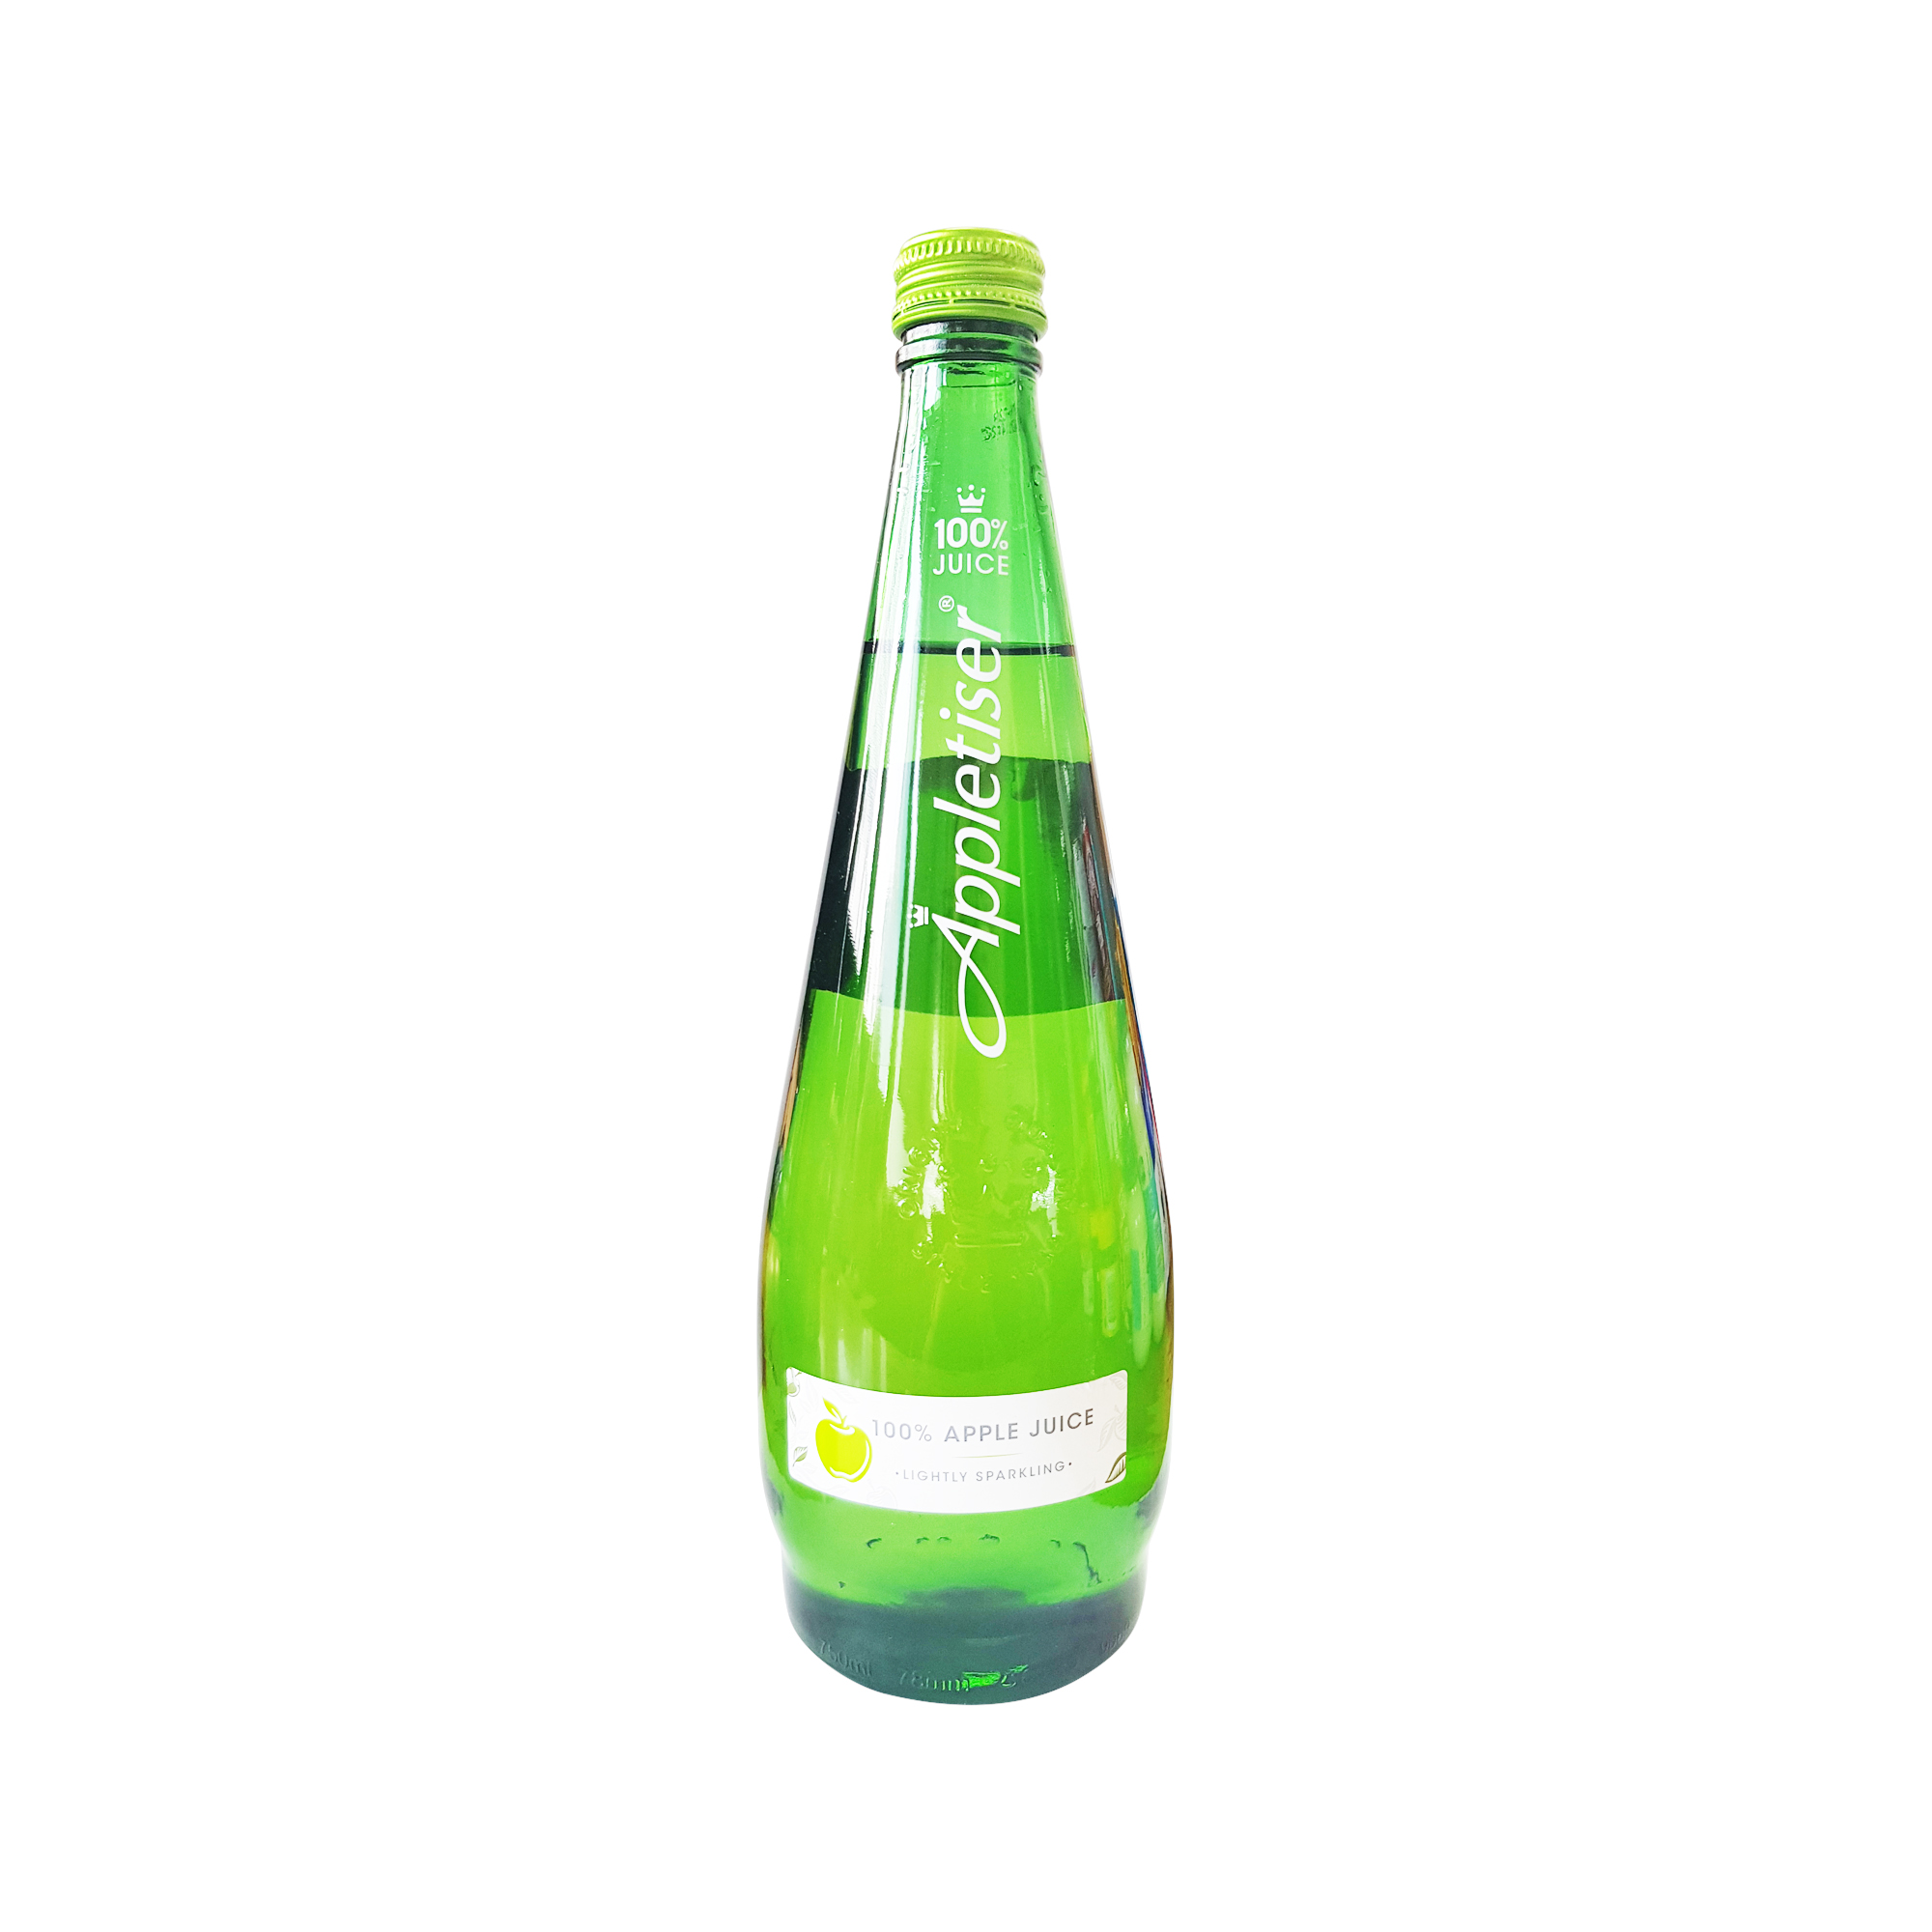 Appletiser Sparkling Apple Juice (750ml)